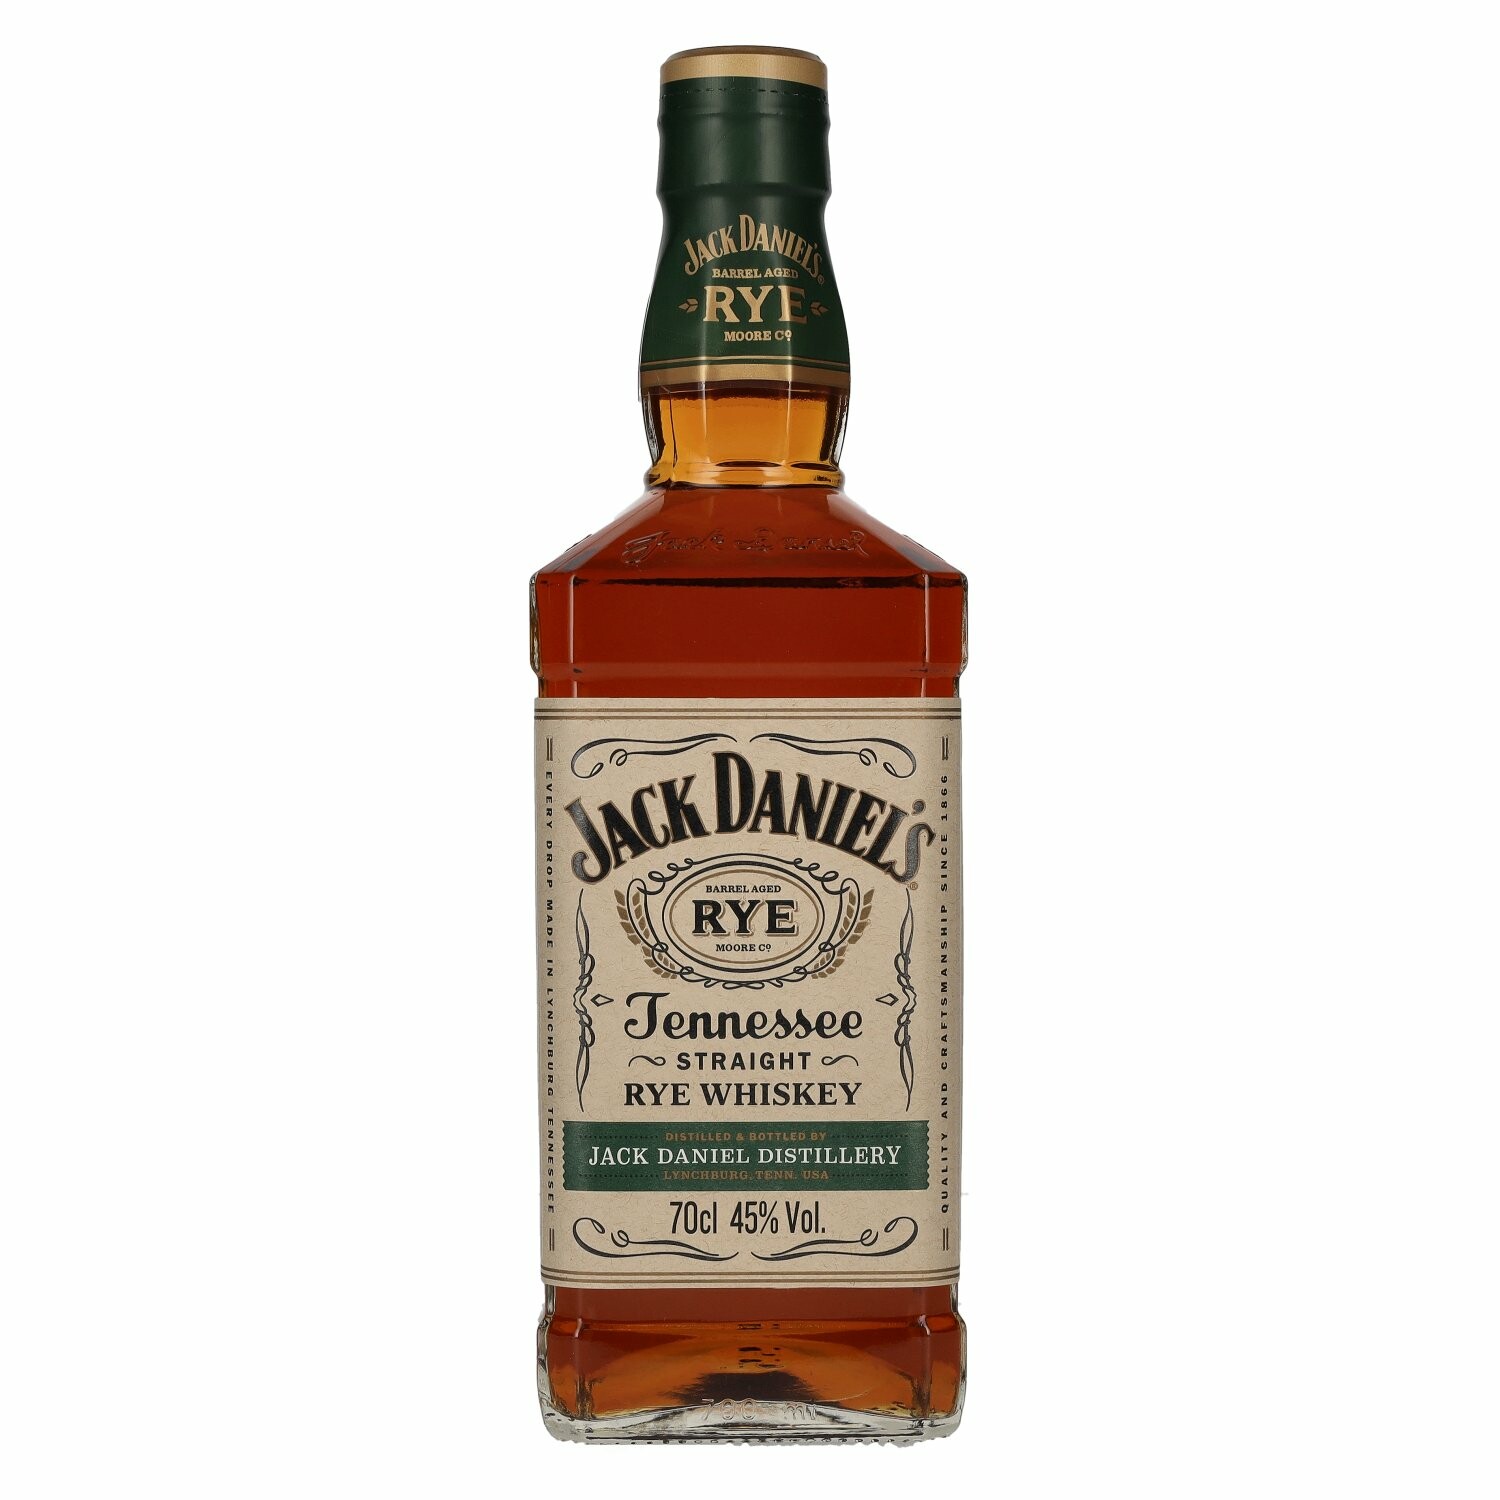 Jack Daniel's Tennessee RYE Straight Rye Whiskey 45% Vol. 0,7l